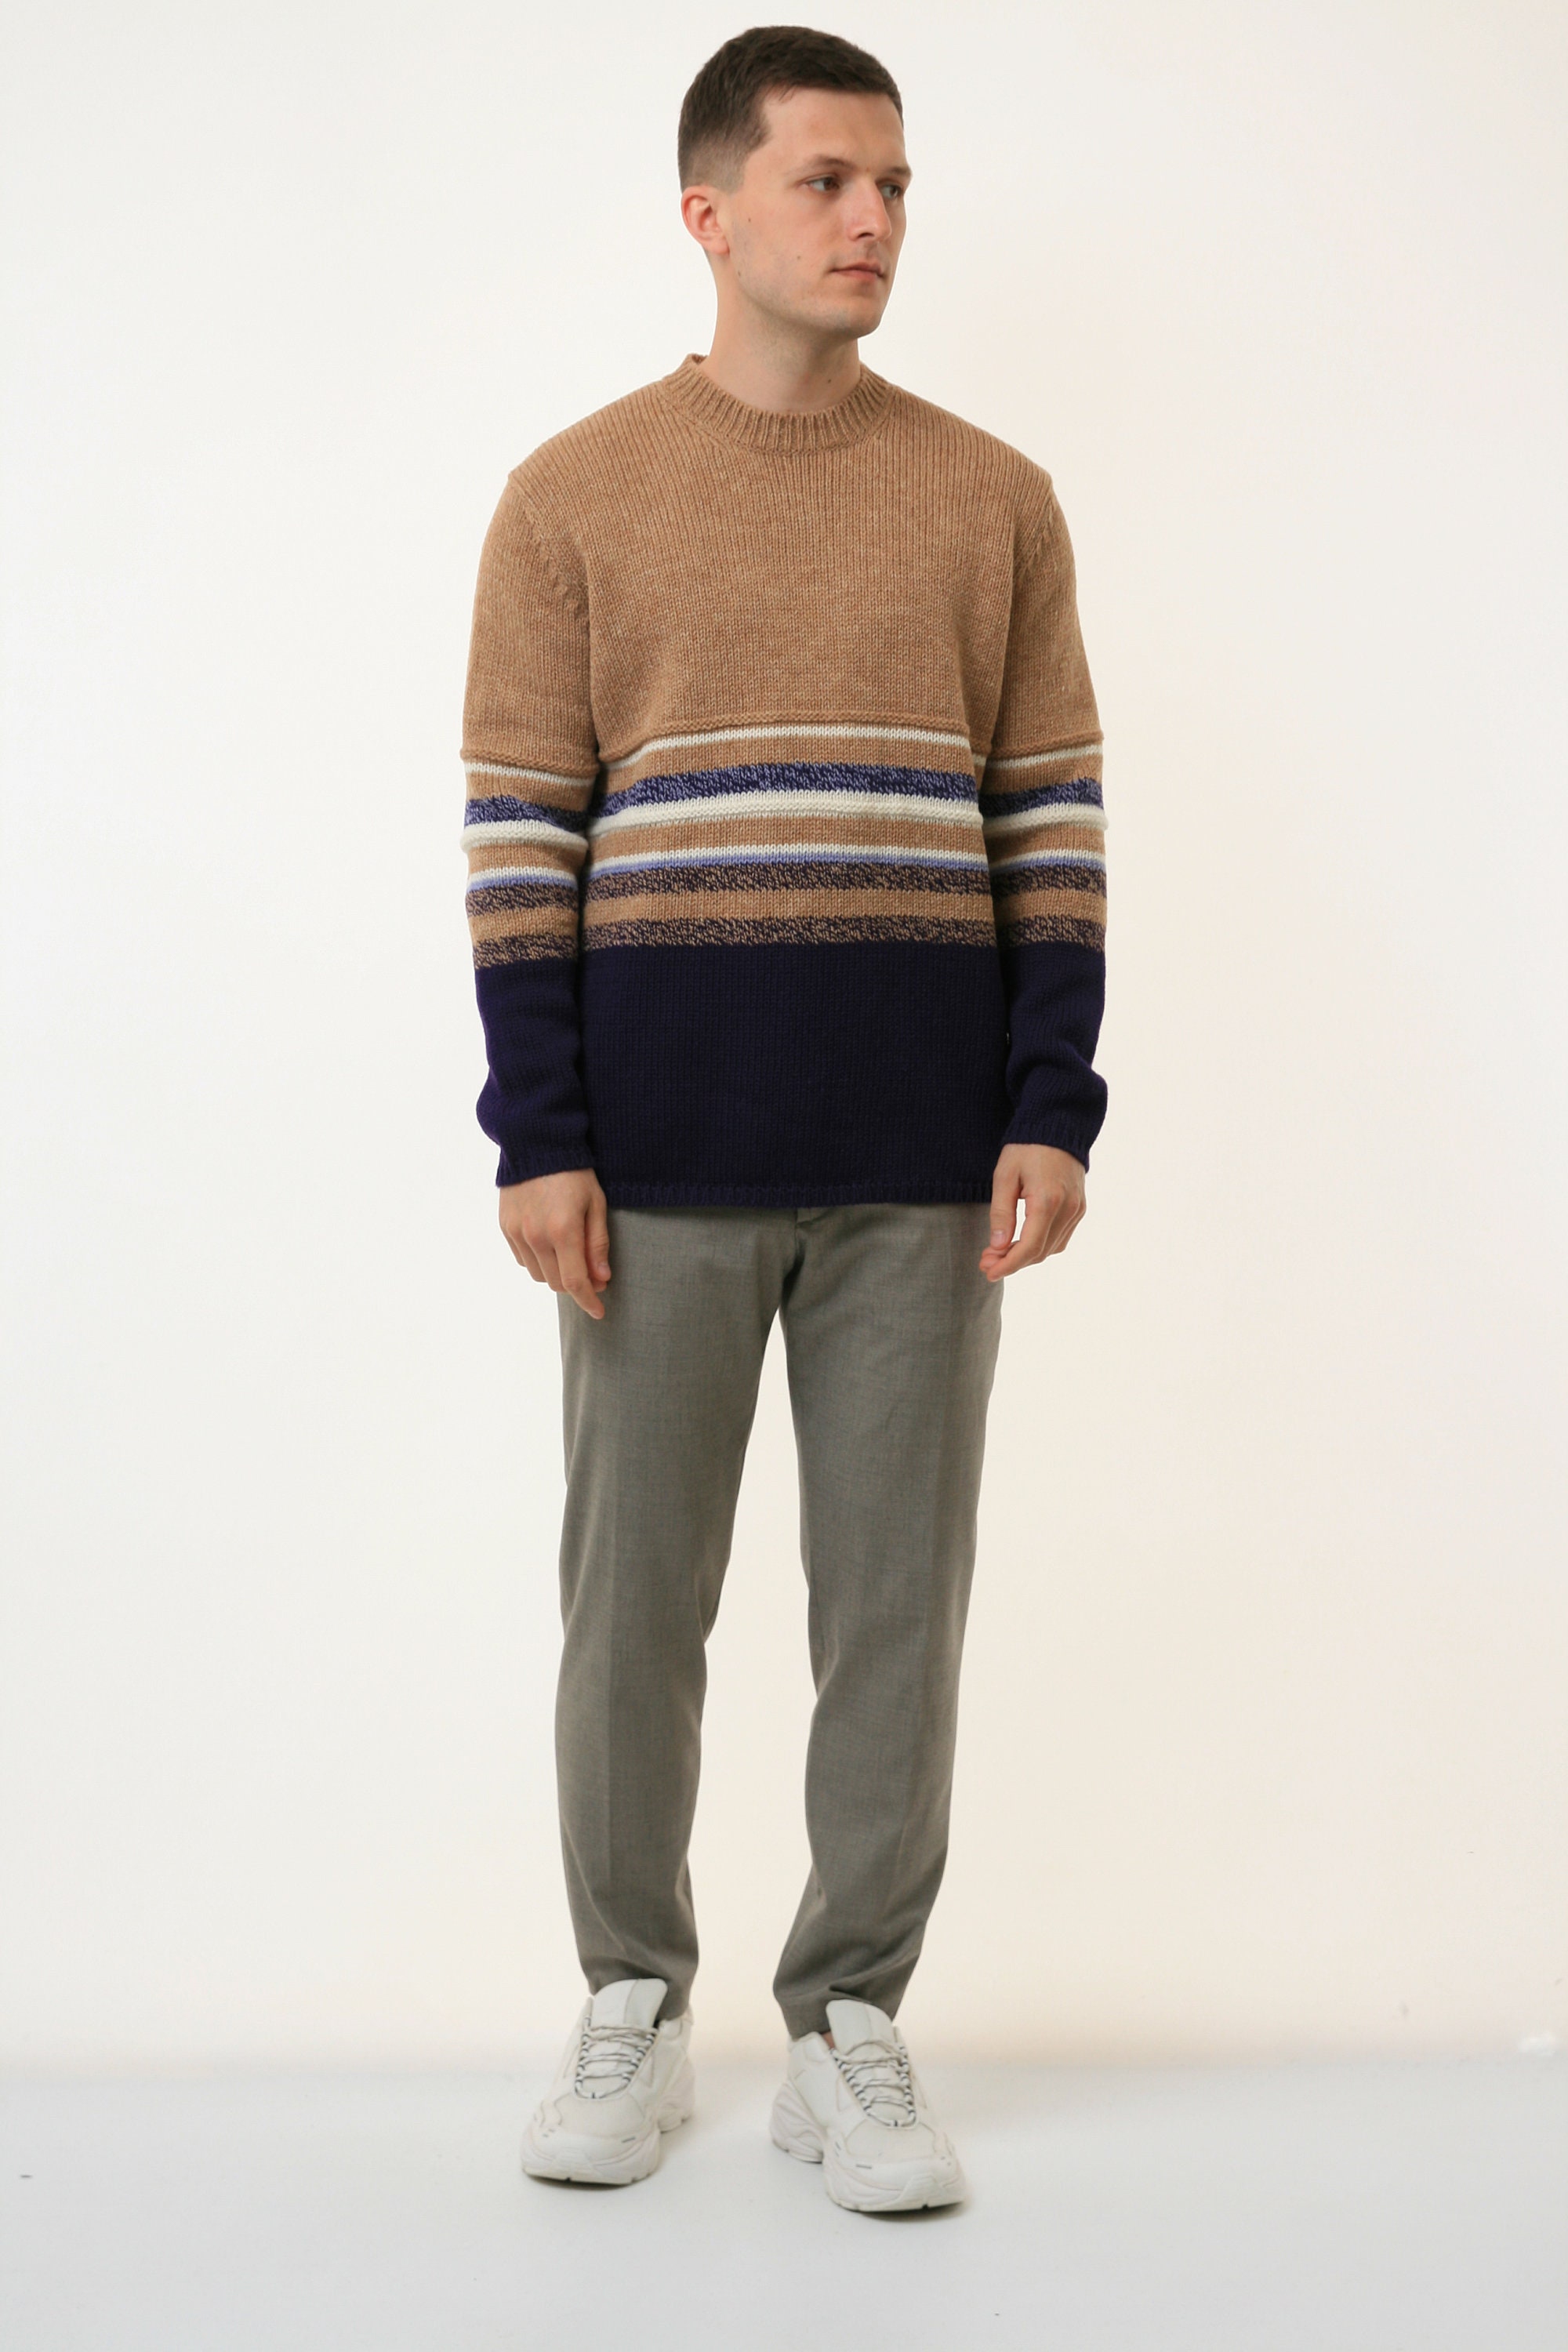 Wool Greenwood Knitwear Vintage Jumper Sweater Mens Clothing - Etsy UK